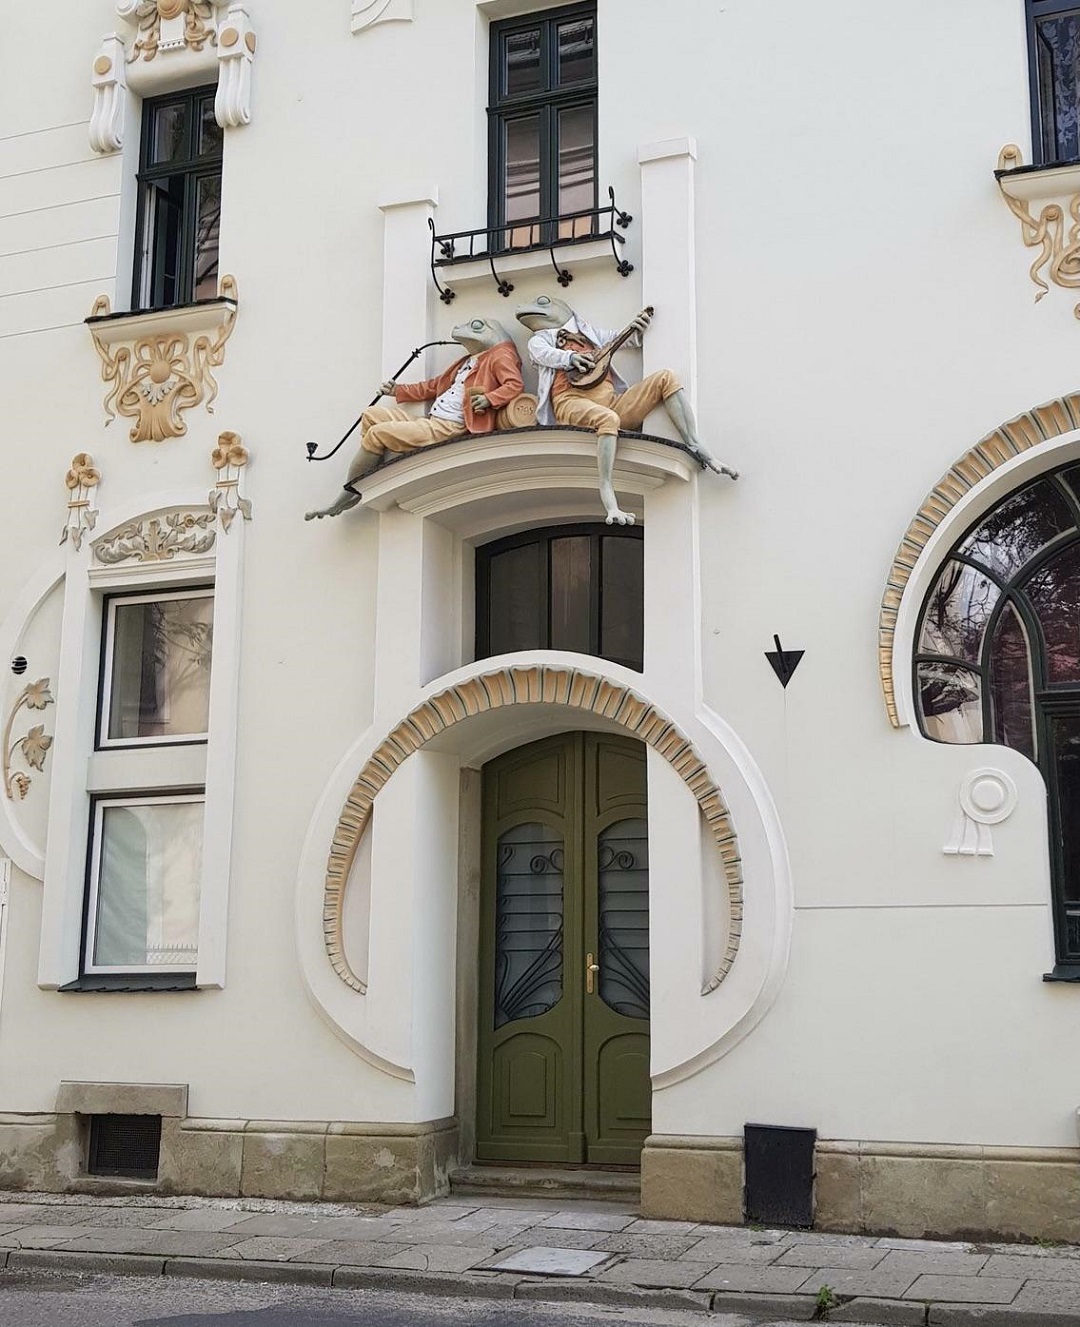 The Frog House In Bielsko-Biała, Poland